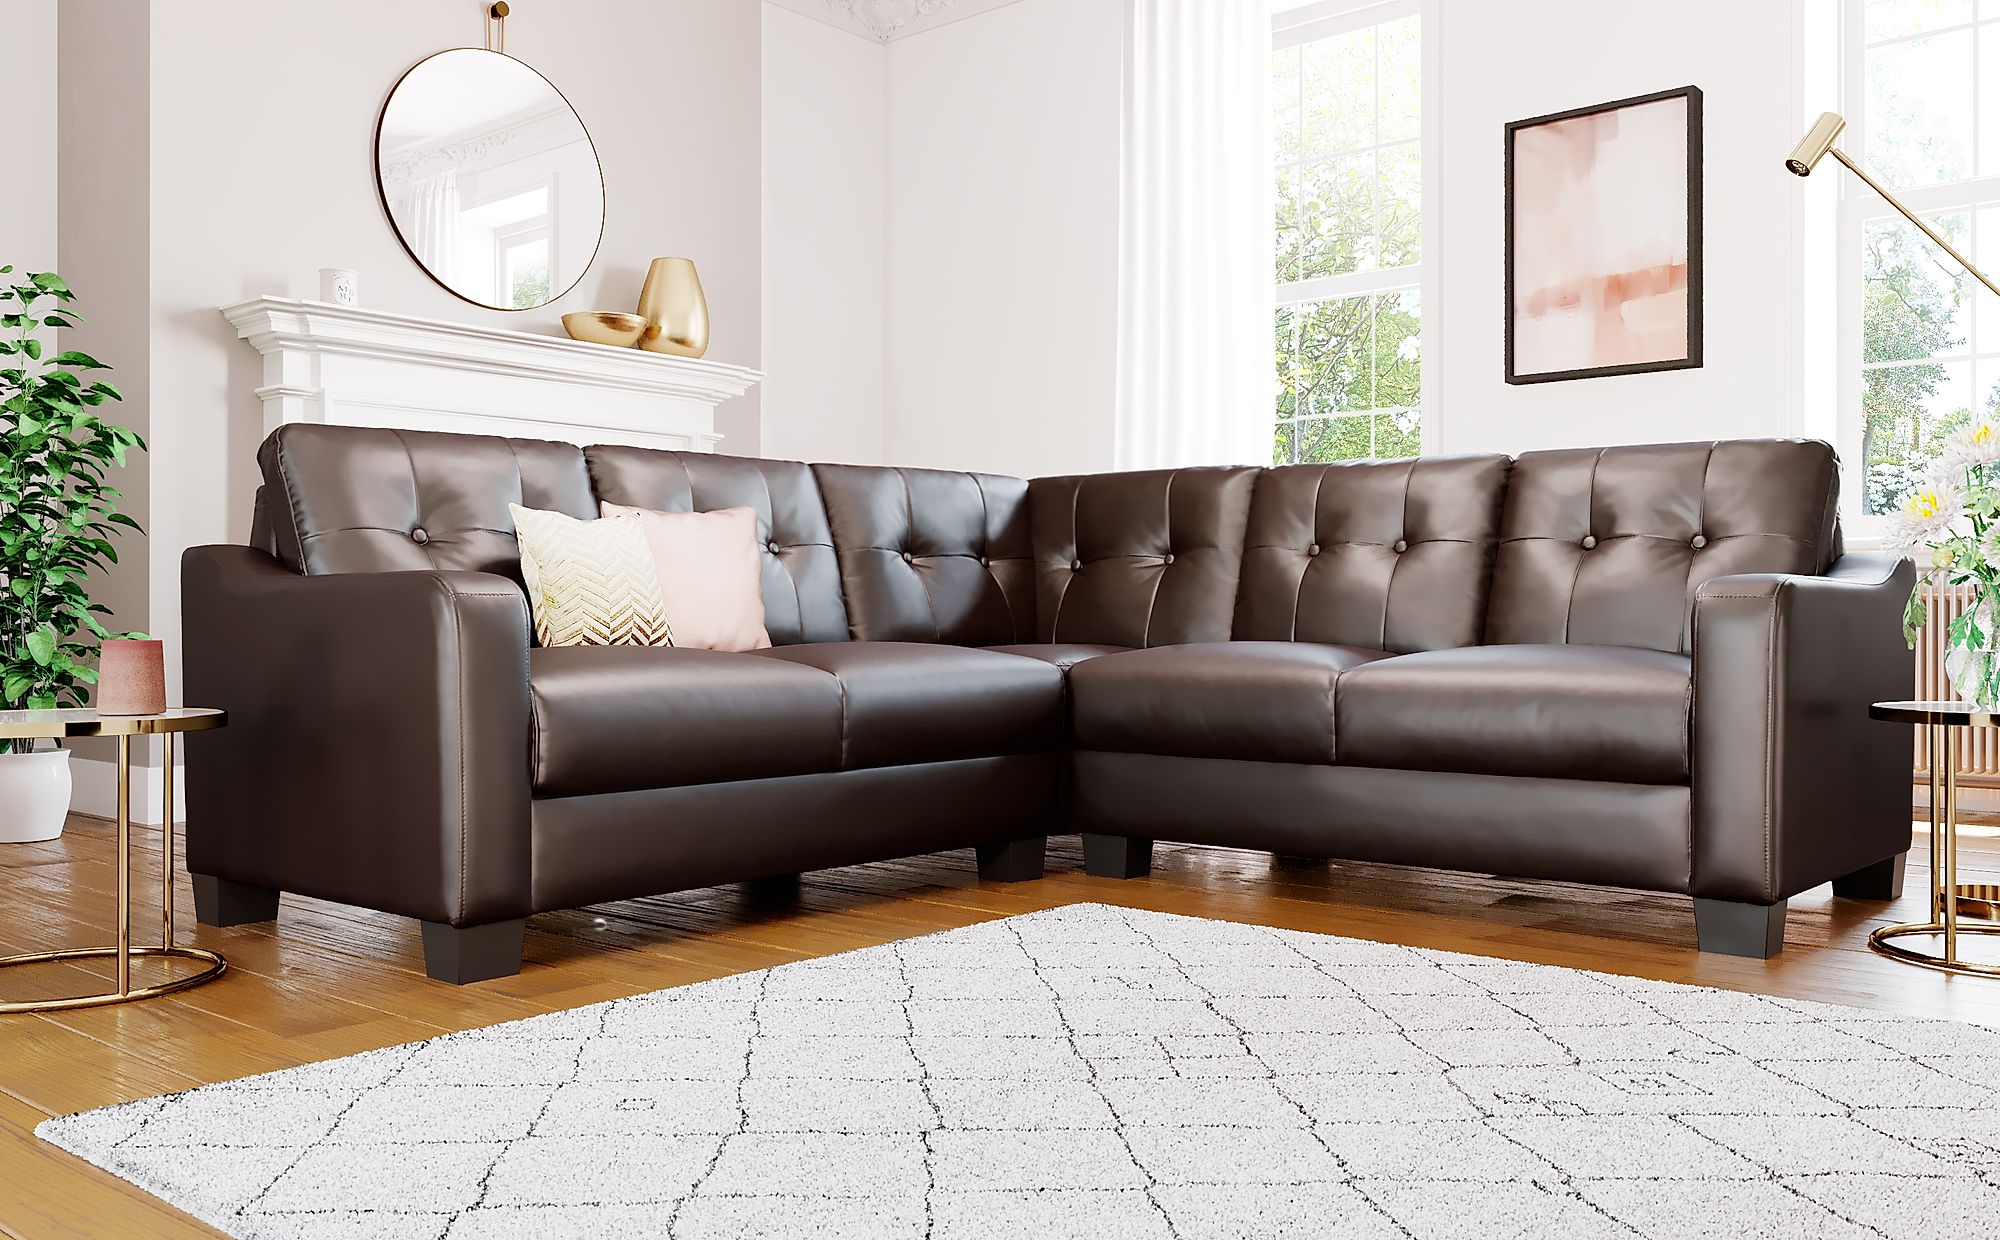 used leather corner sofa wirral